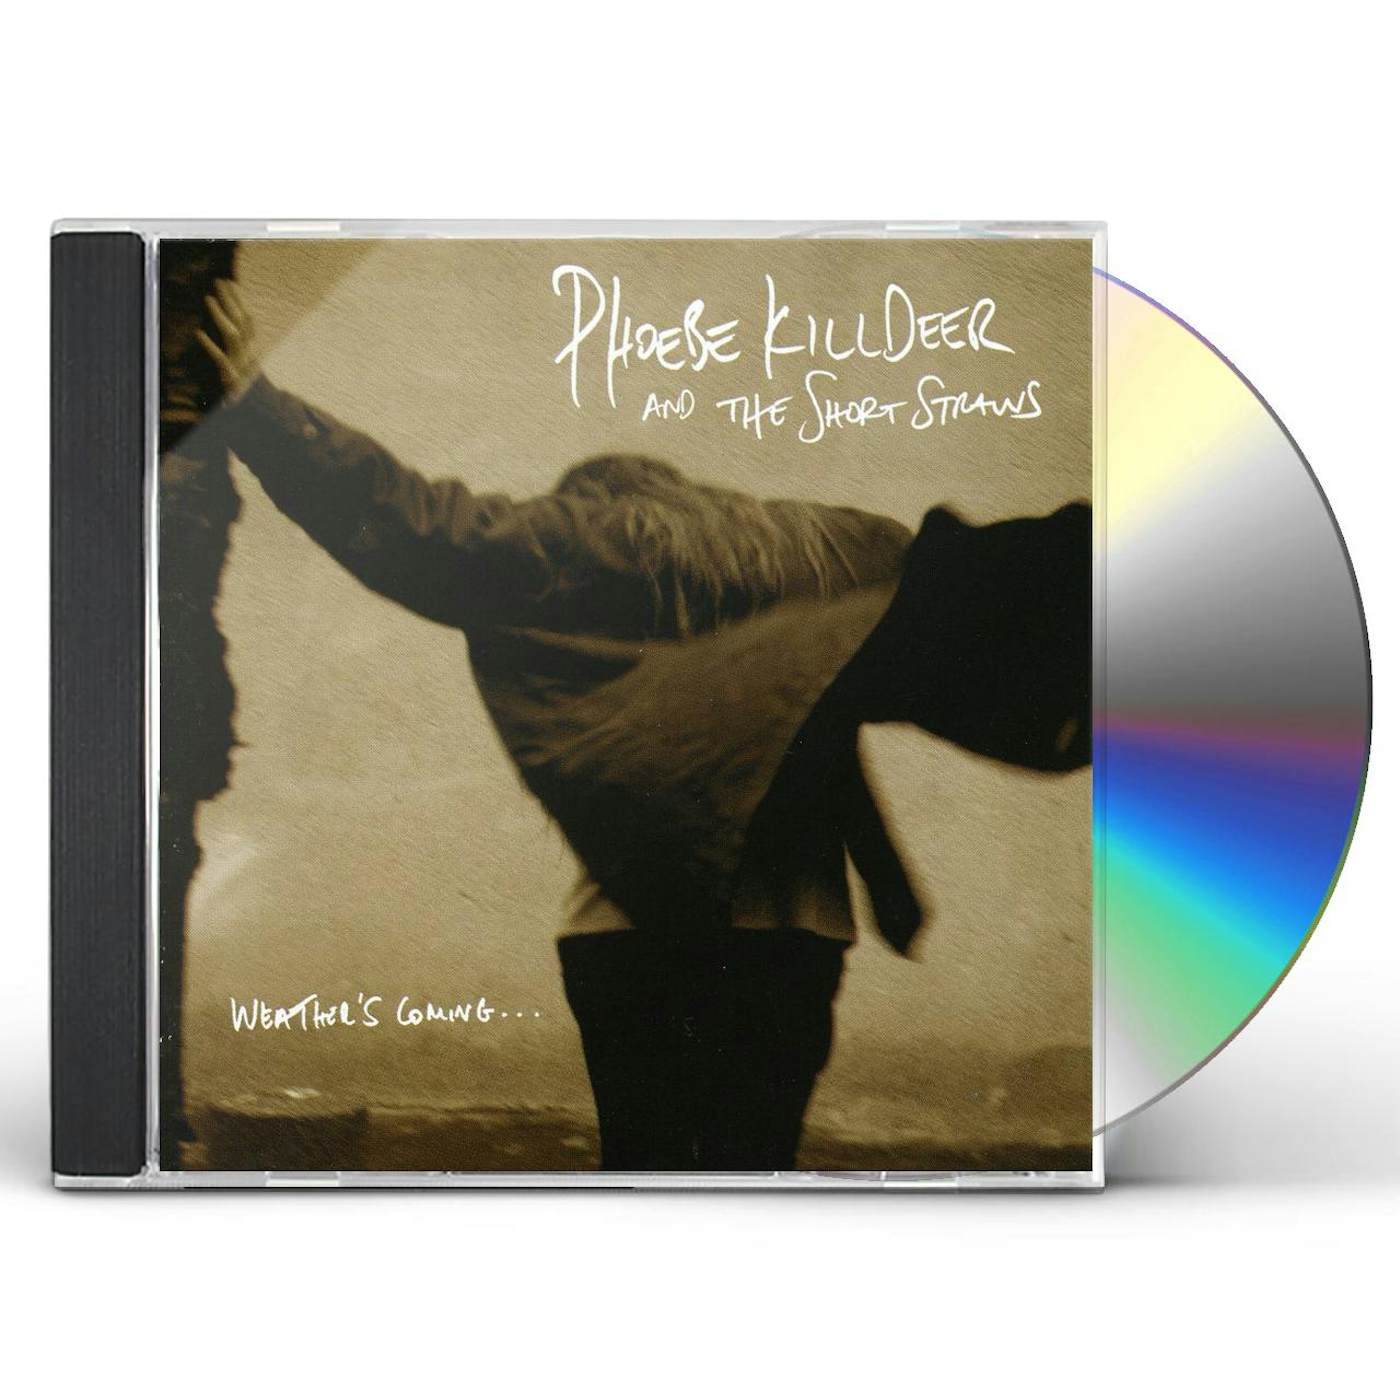 Phoebe Killdeer & The Short Straws WEATHER'S COMING CD